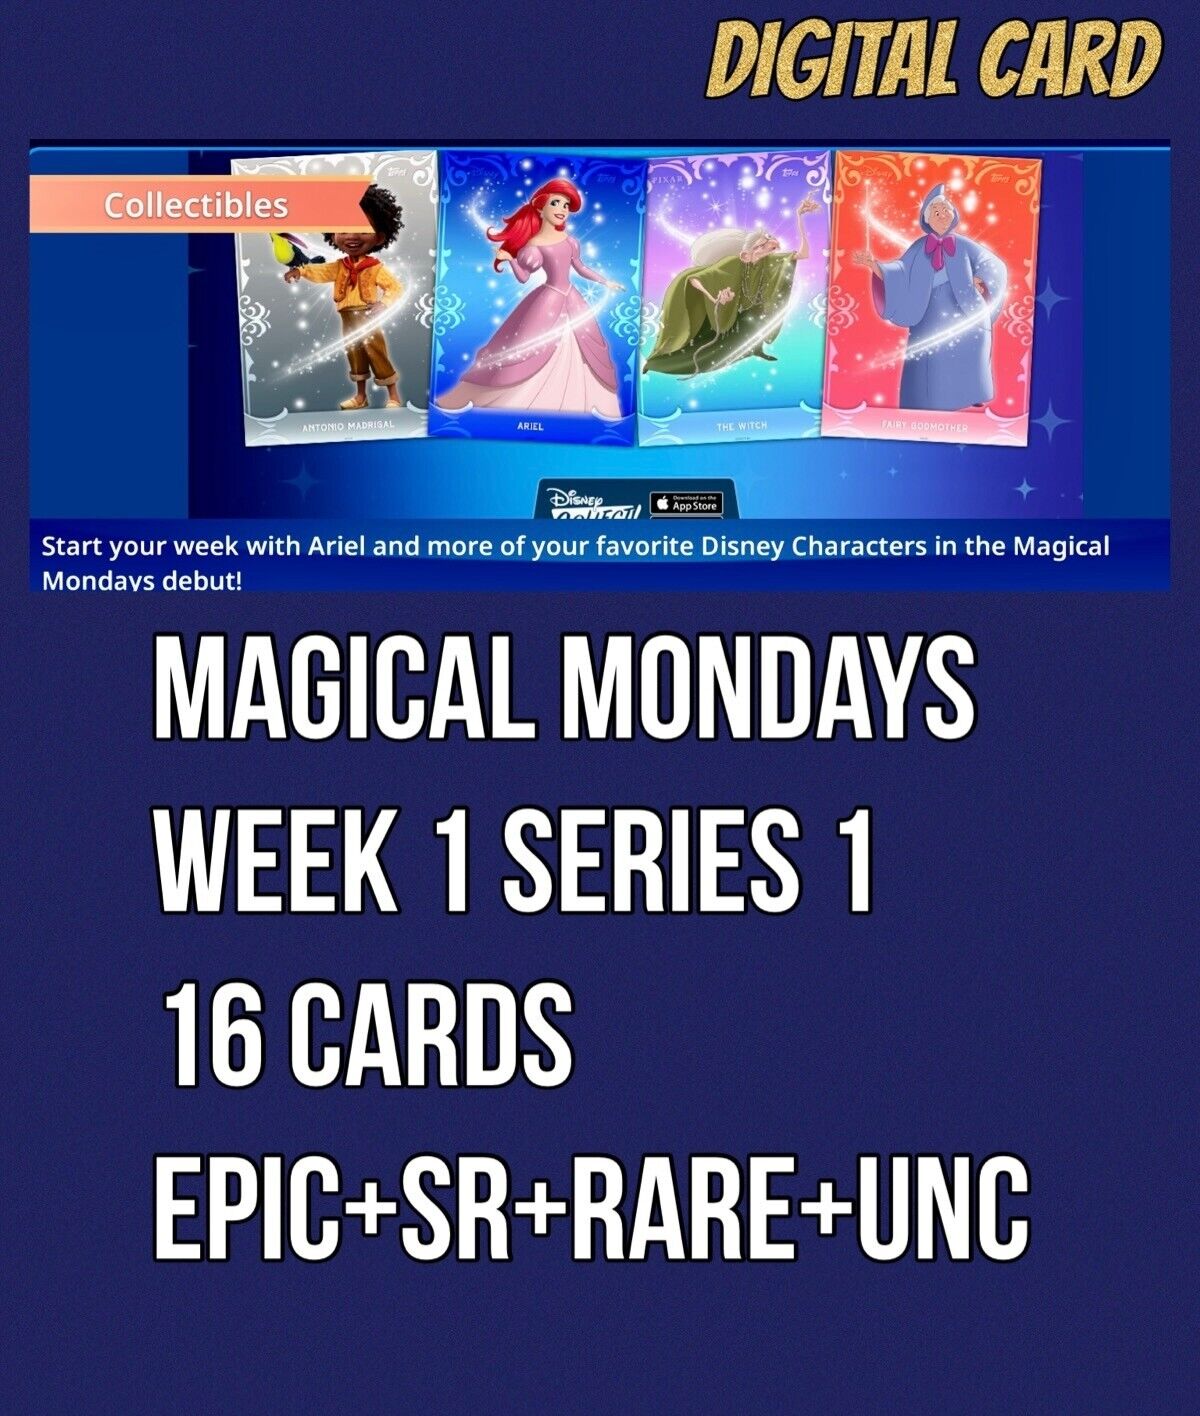 MAGICAL MONDAYS SERIES 1 WEEK 1 EPIC+SR+RARE+UC 16 CARD TOPPS DISNEY COLLECT SET